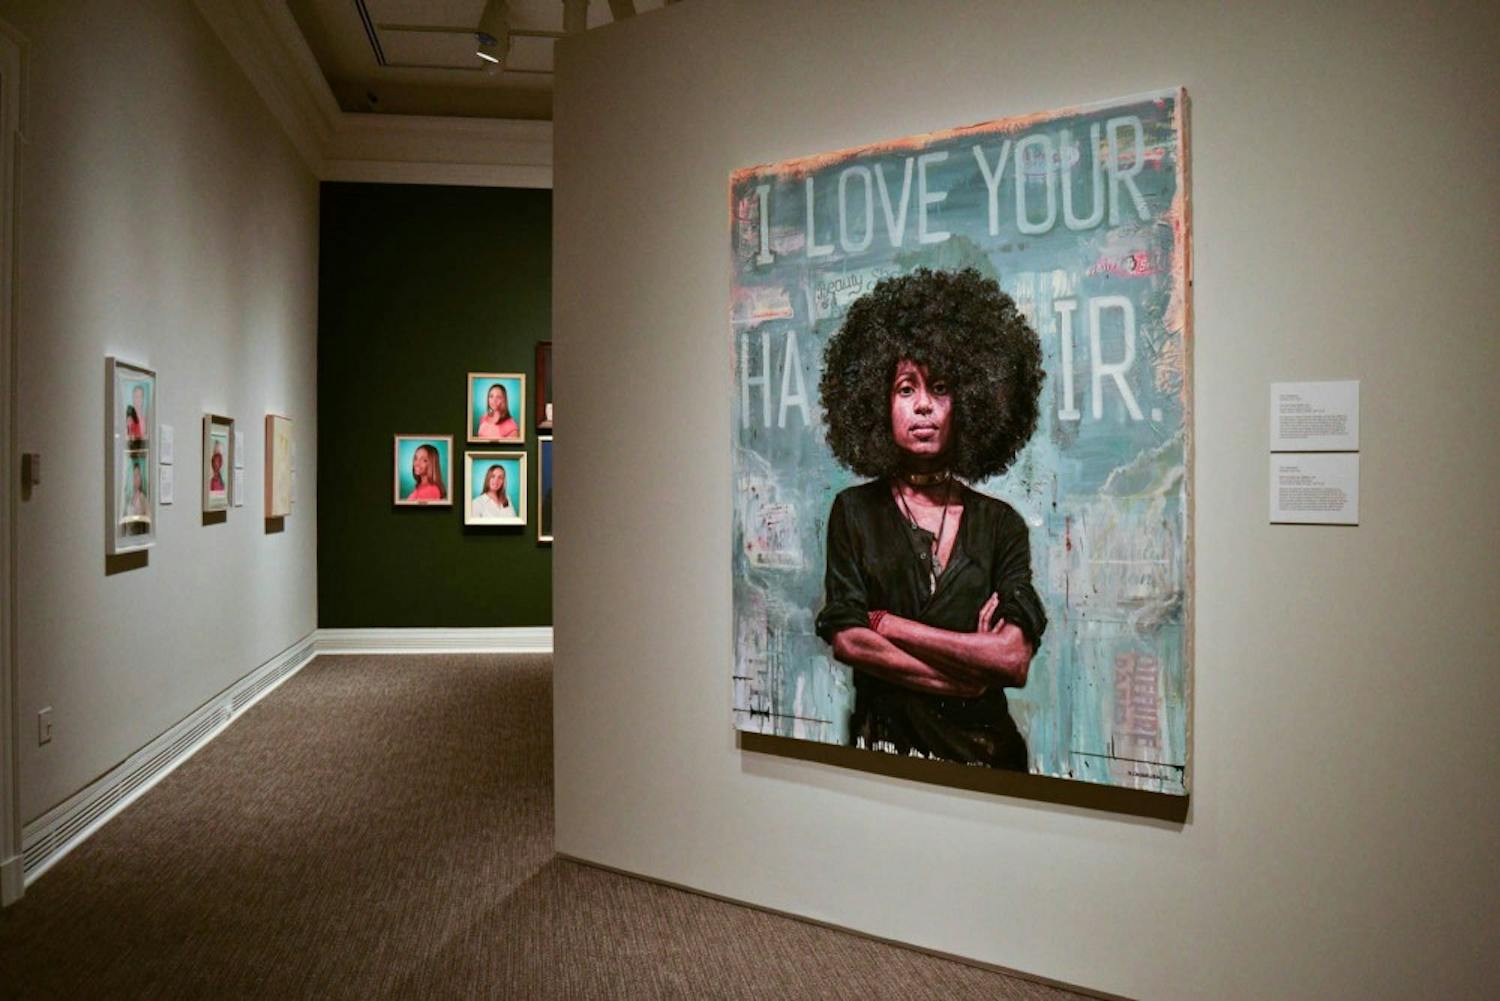 Tim Okamura's "I Love Your Hair". Oil and mixed media on canvas, 2013. Okamura explores mixed media art to portray his love of hip-hop and create a sense of urban identity.